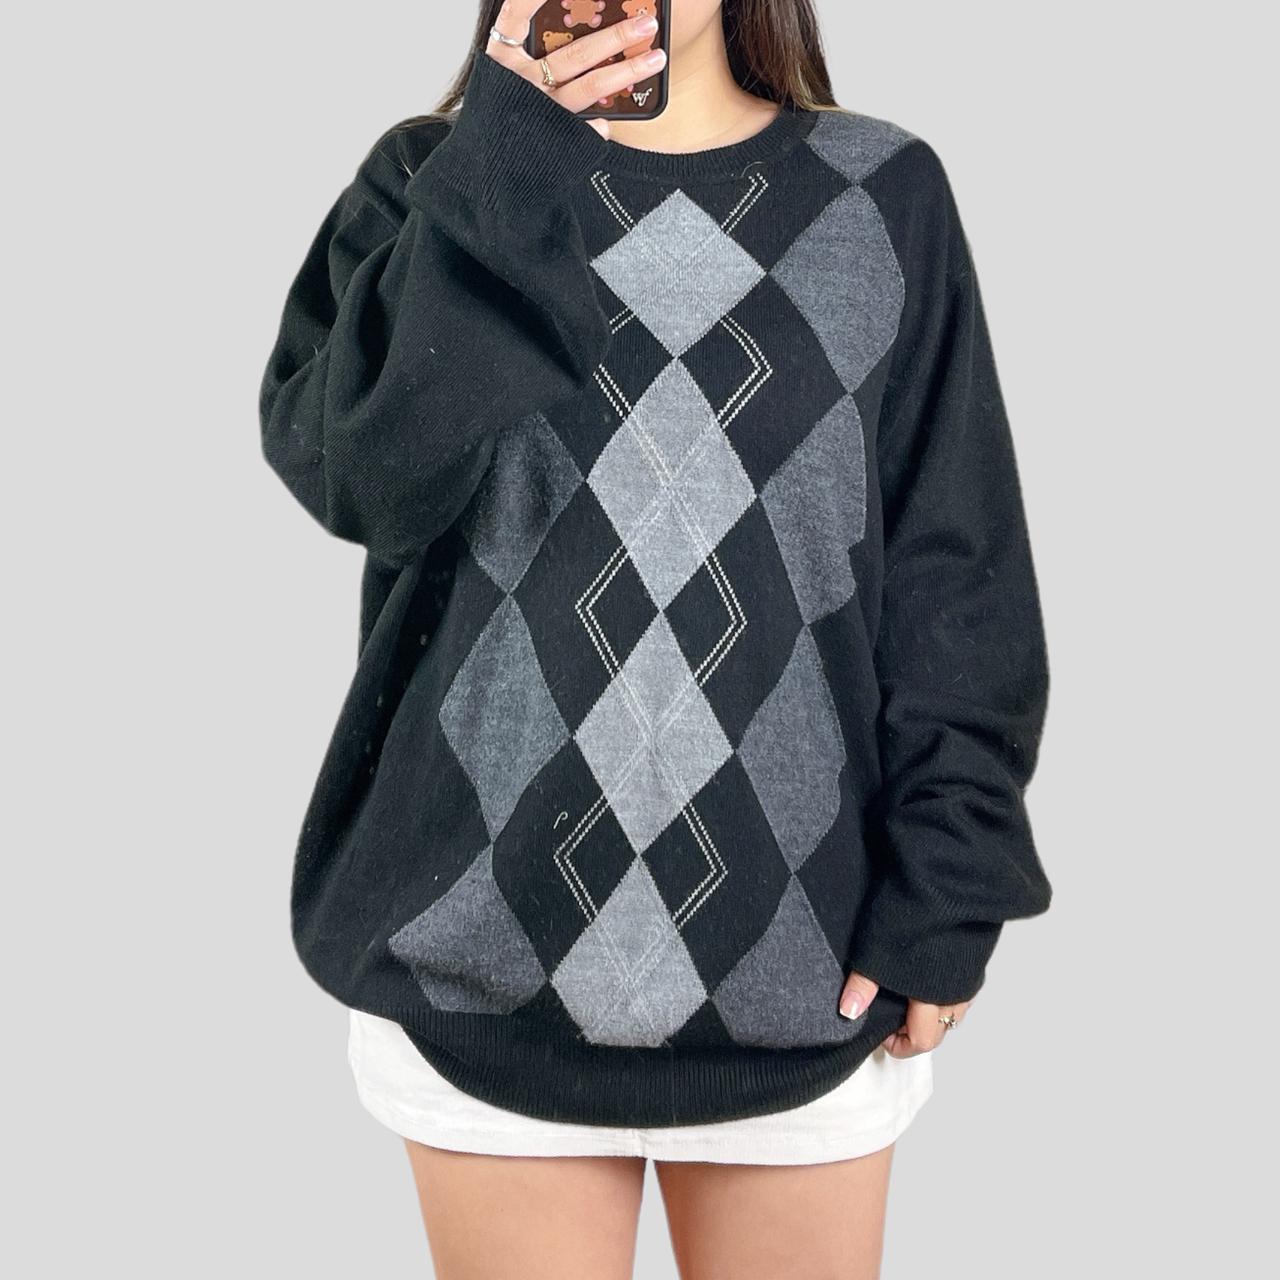 Product Image 2 - preppy argyle oversized sweater

Brand: dockers
Size